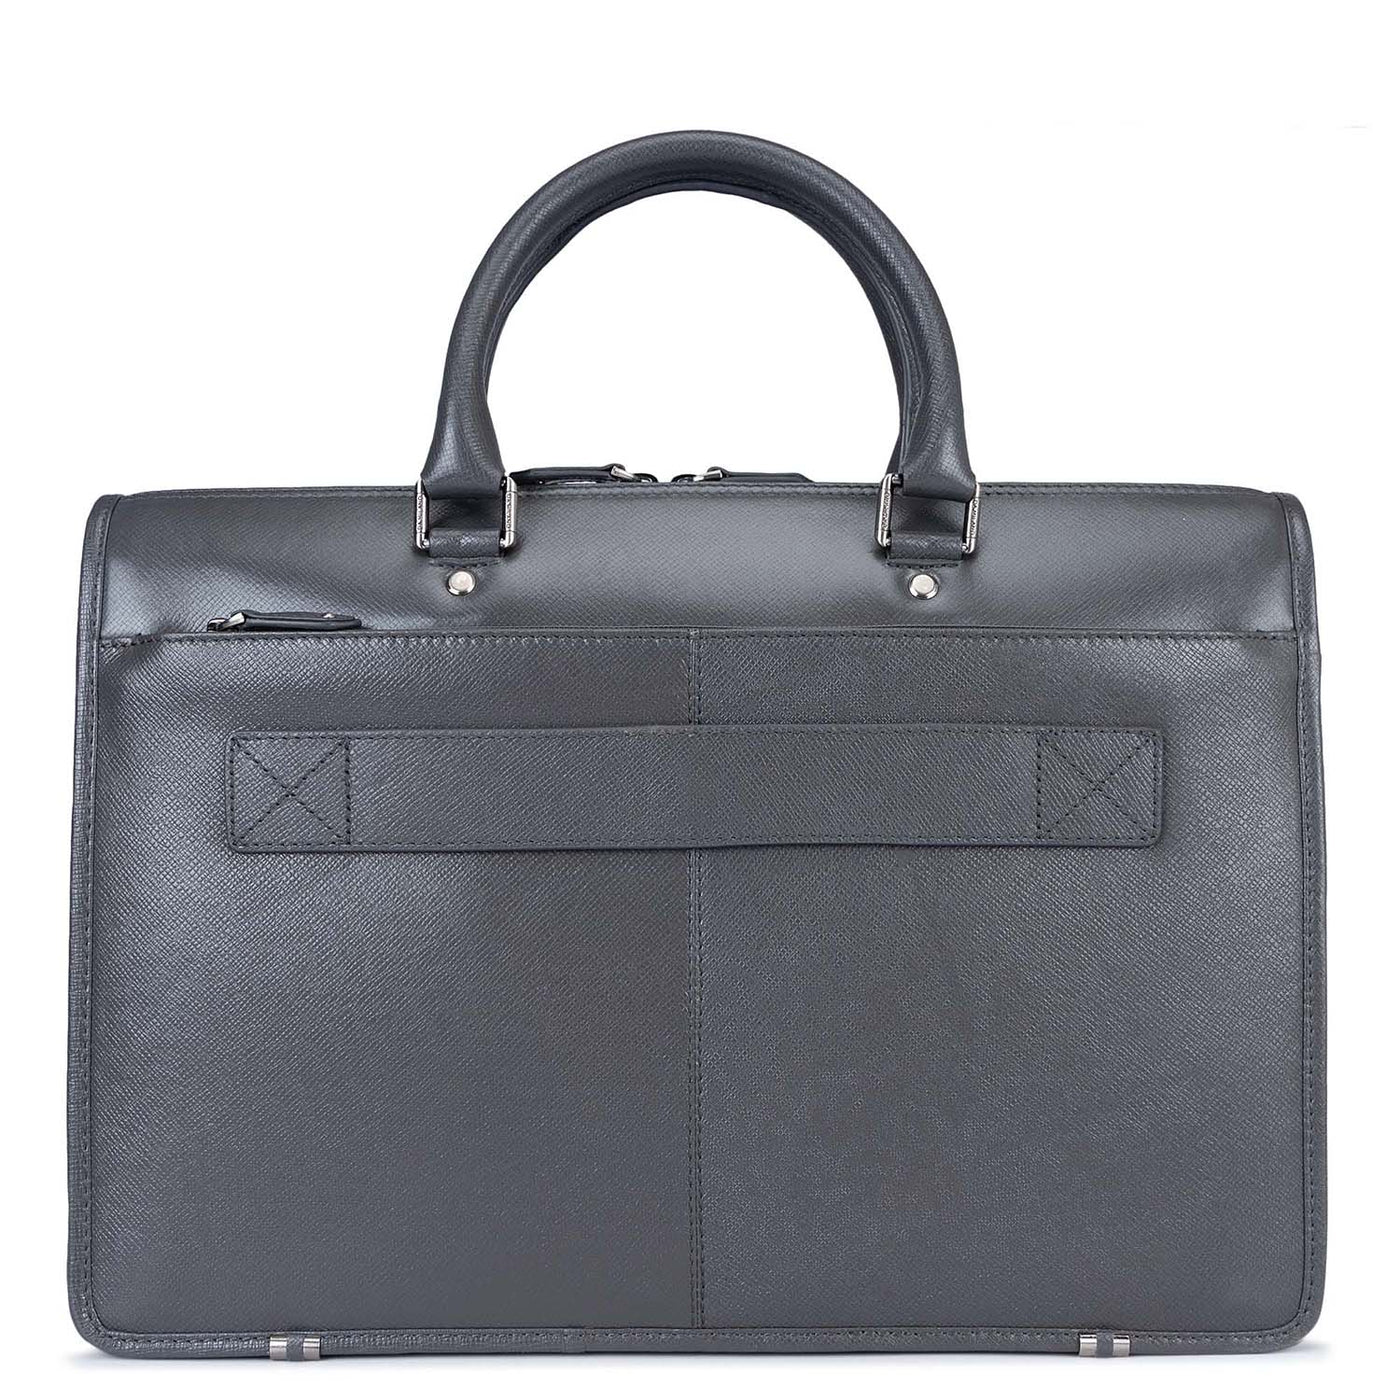 Grey Franzy Leather Laptop Bag - Upto 15"